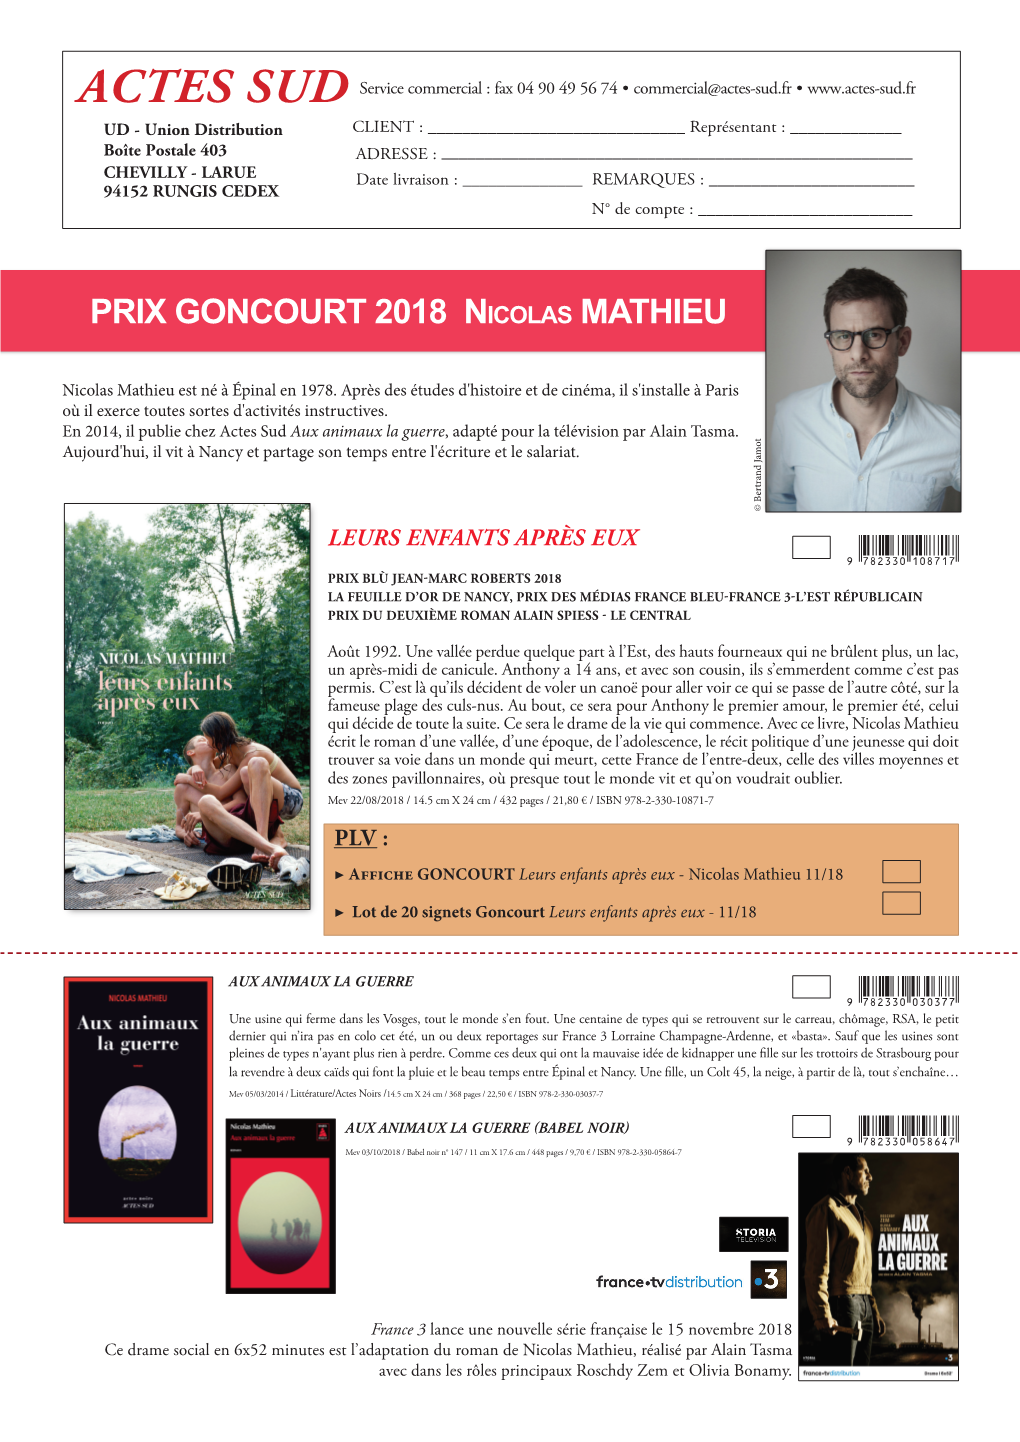 PRIX GONCOURT 2018 Nicolas Mathieu